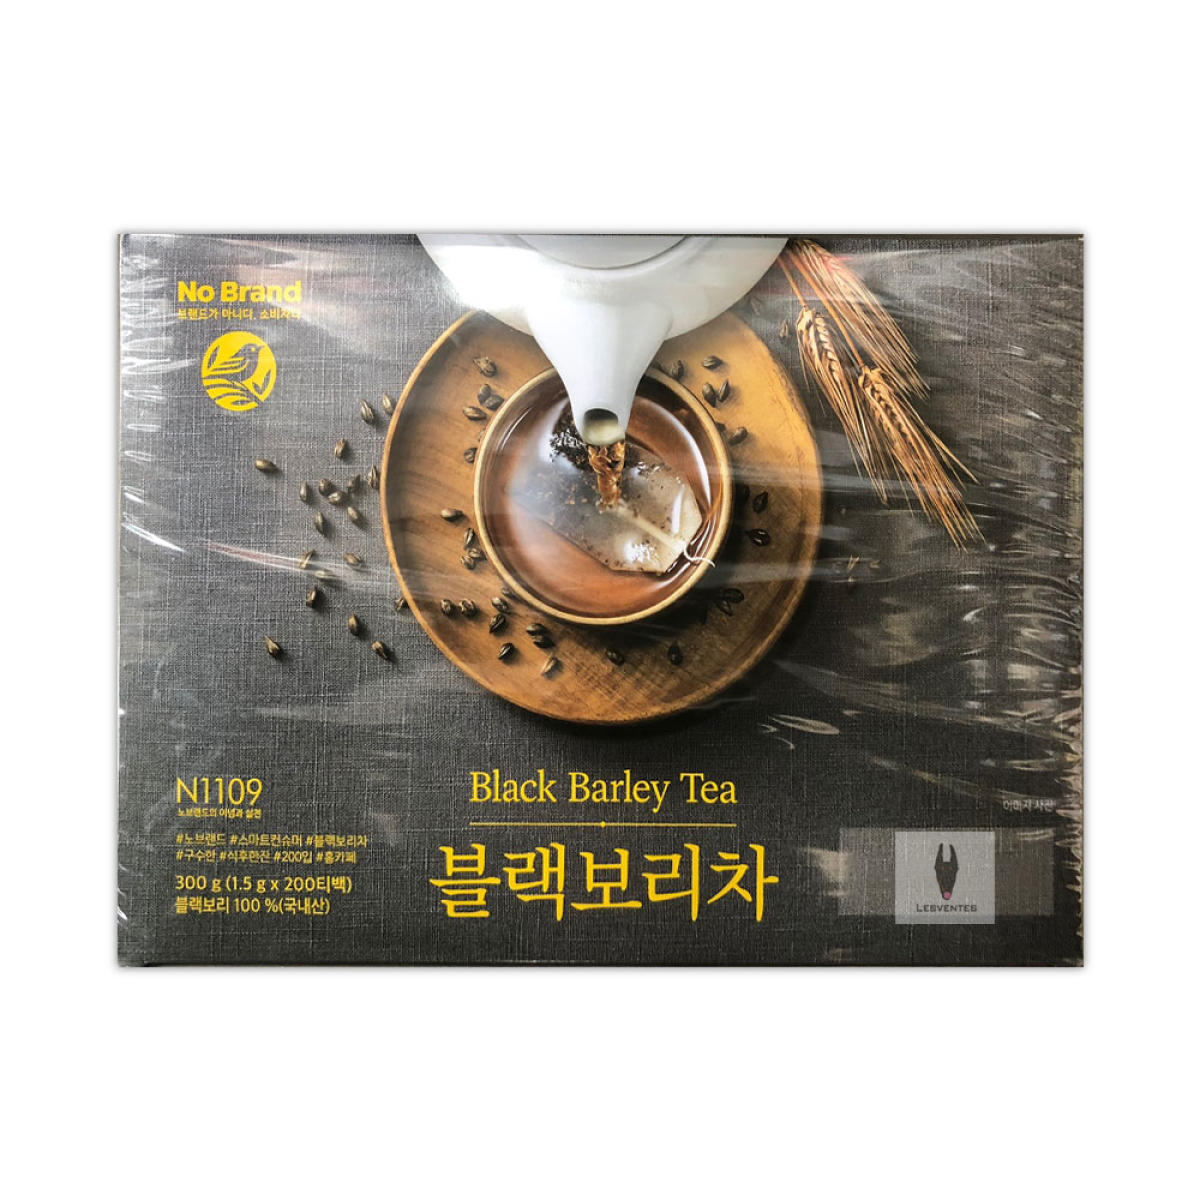 Black Barley Tea 300g (1.5g x 200 TB) Vascular Health, Cholesterol Level Control by Korean Tea